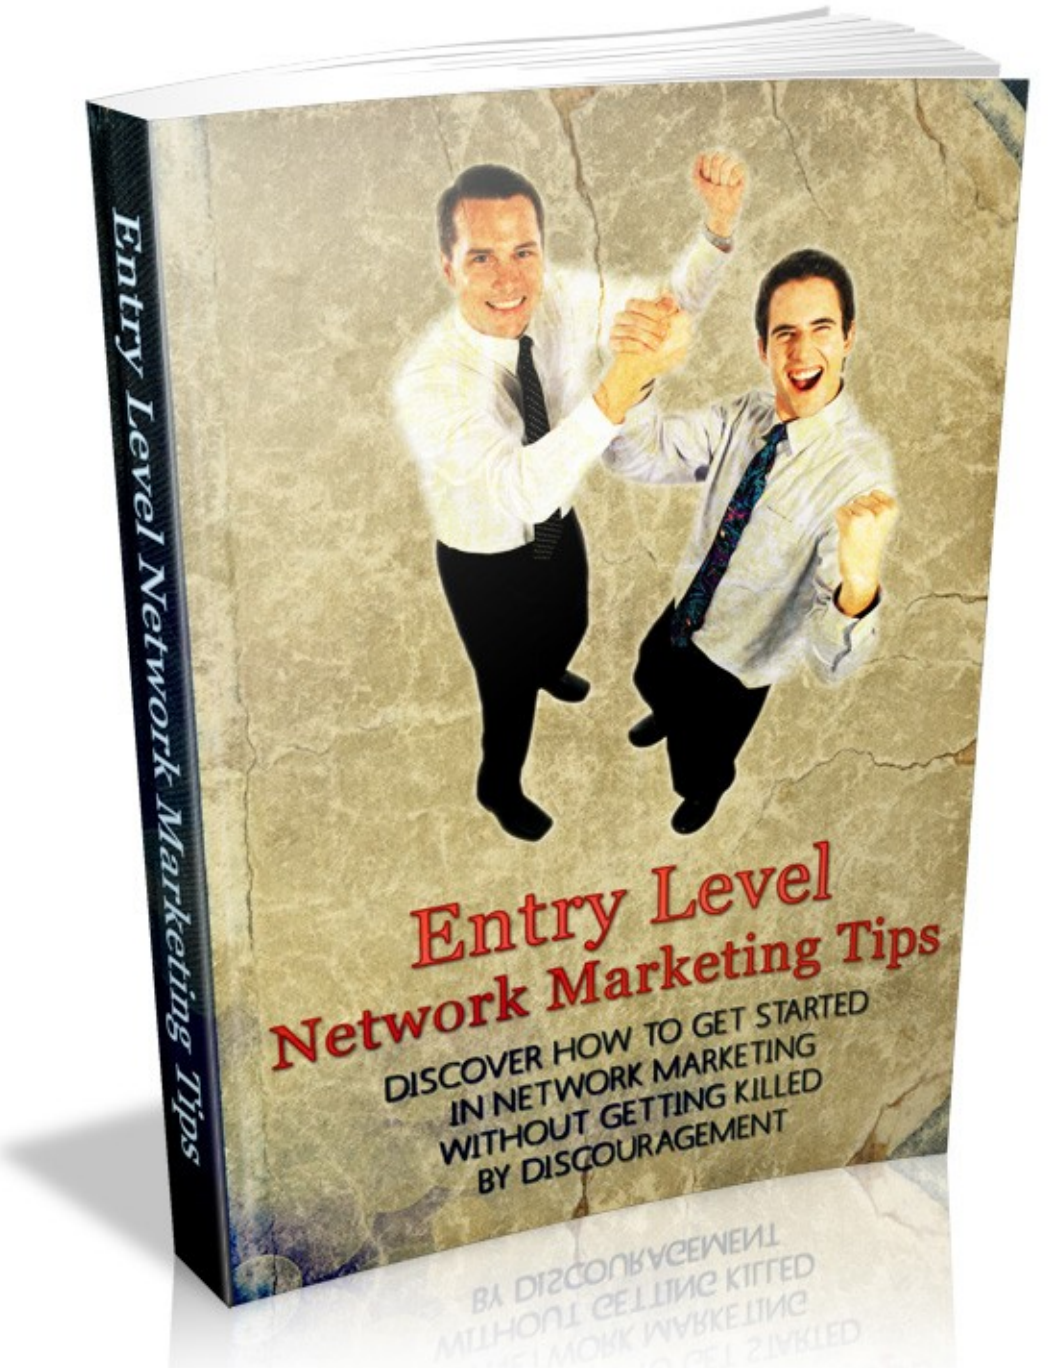 Entry Level Network Marketing Tips